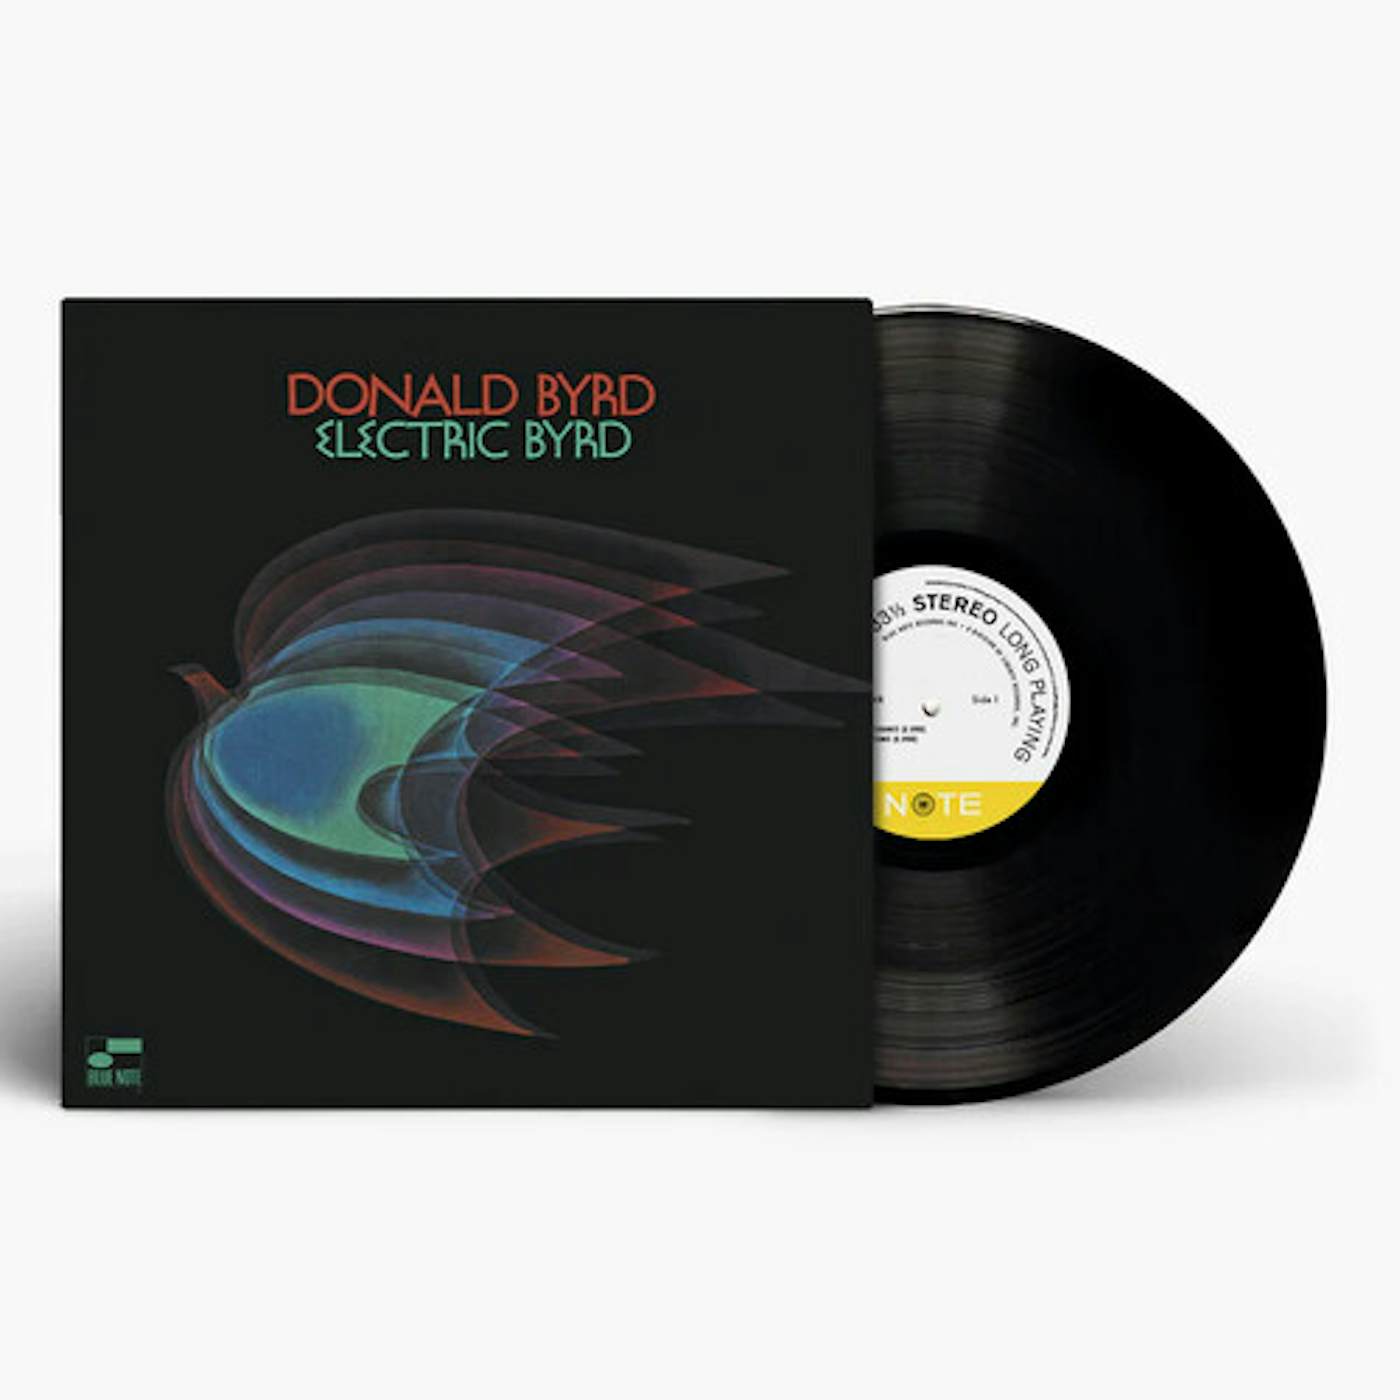 Donald Byrd Electric Byrd Vinyl Record